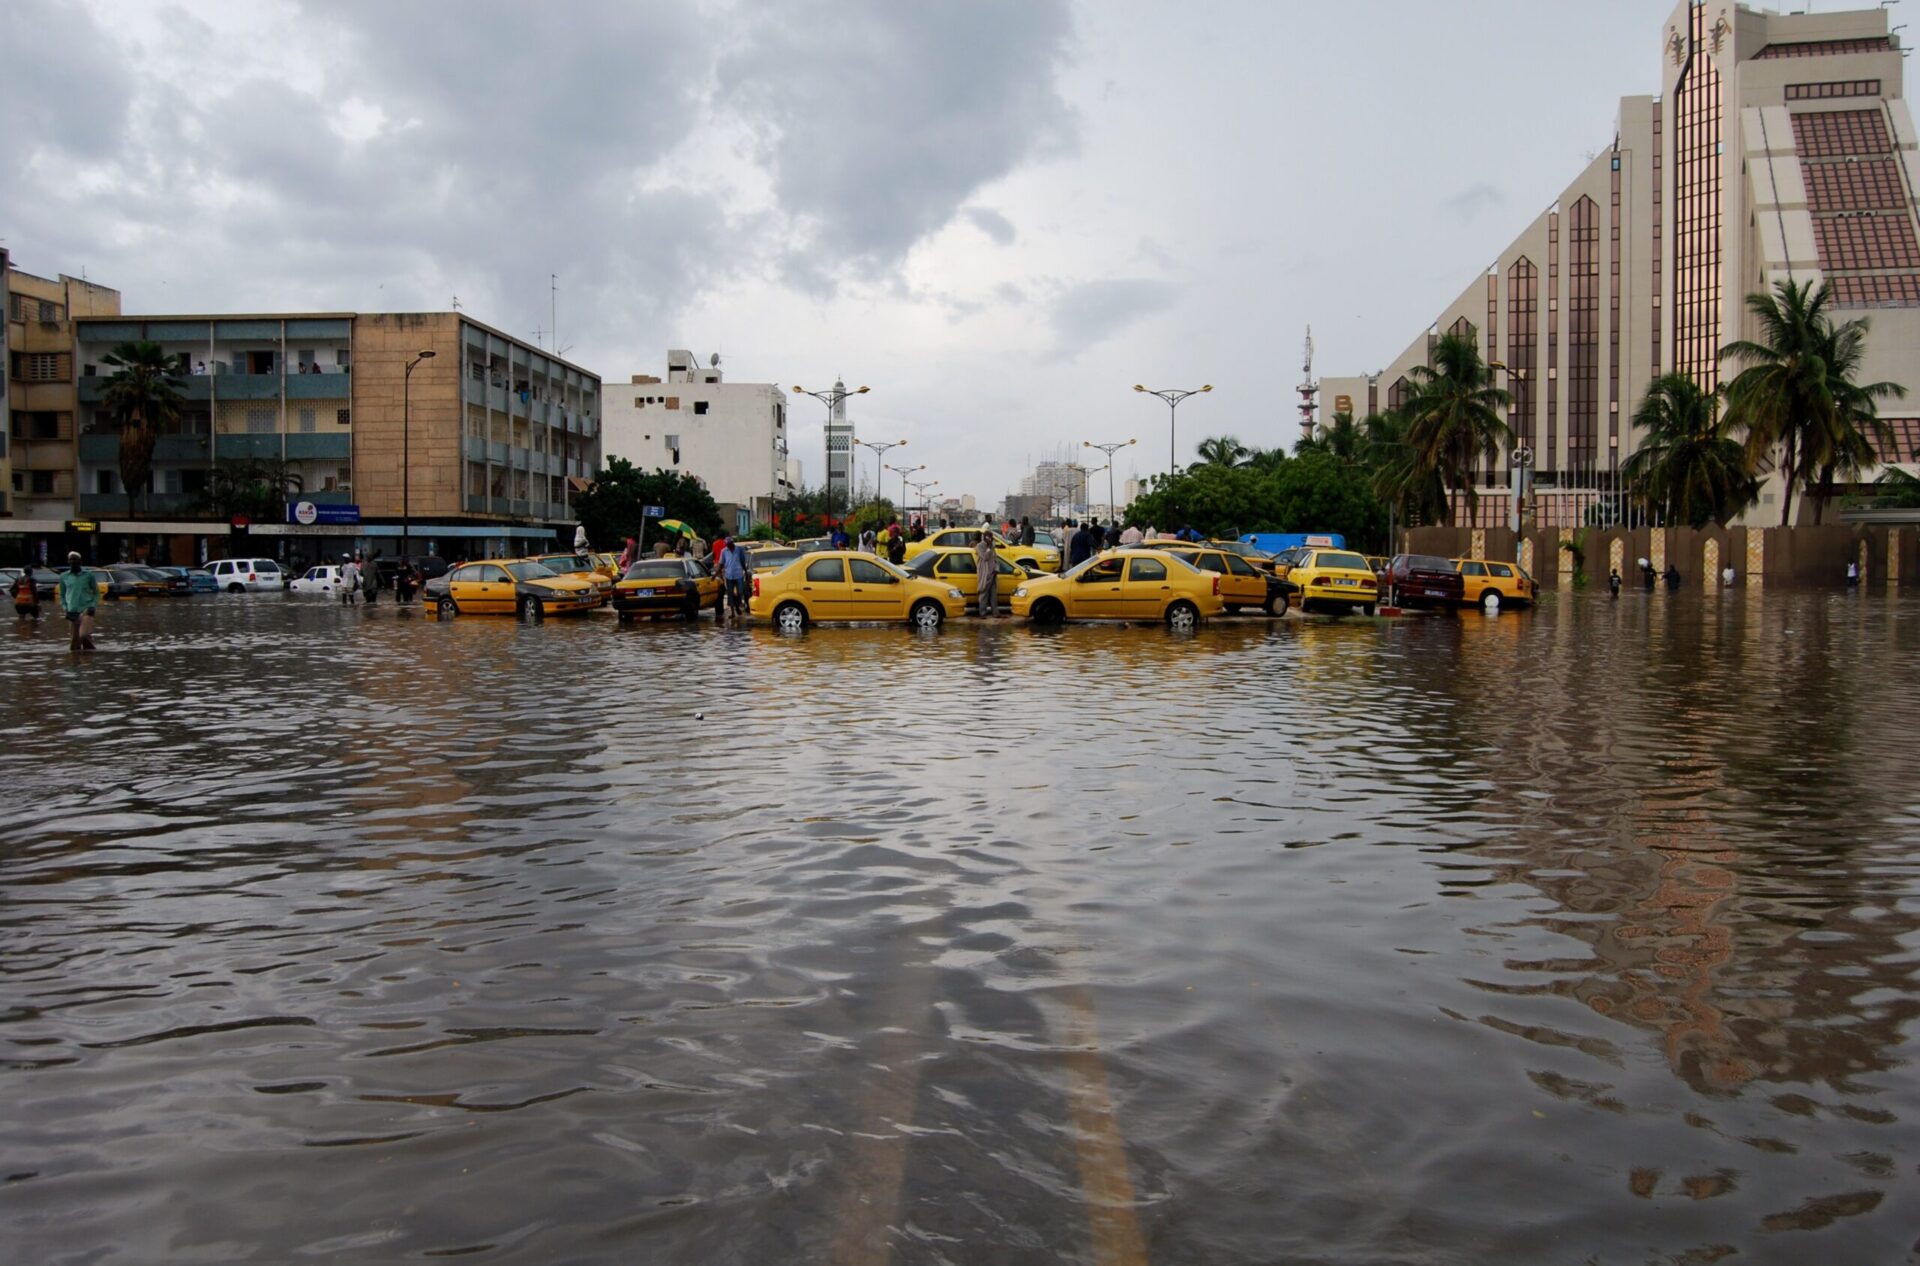 Flooded city centre